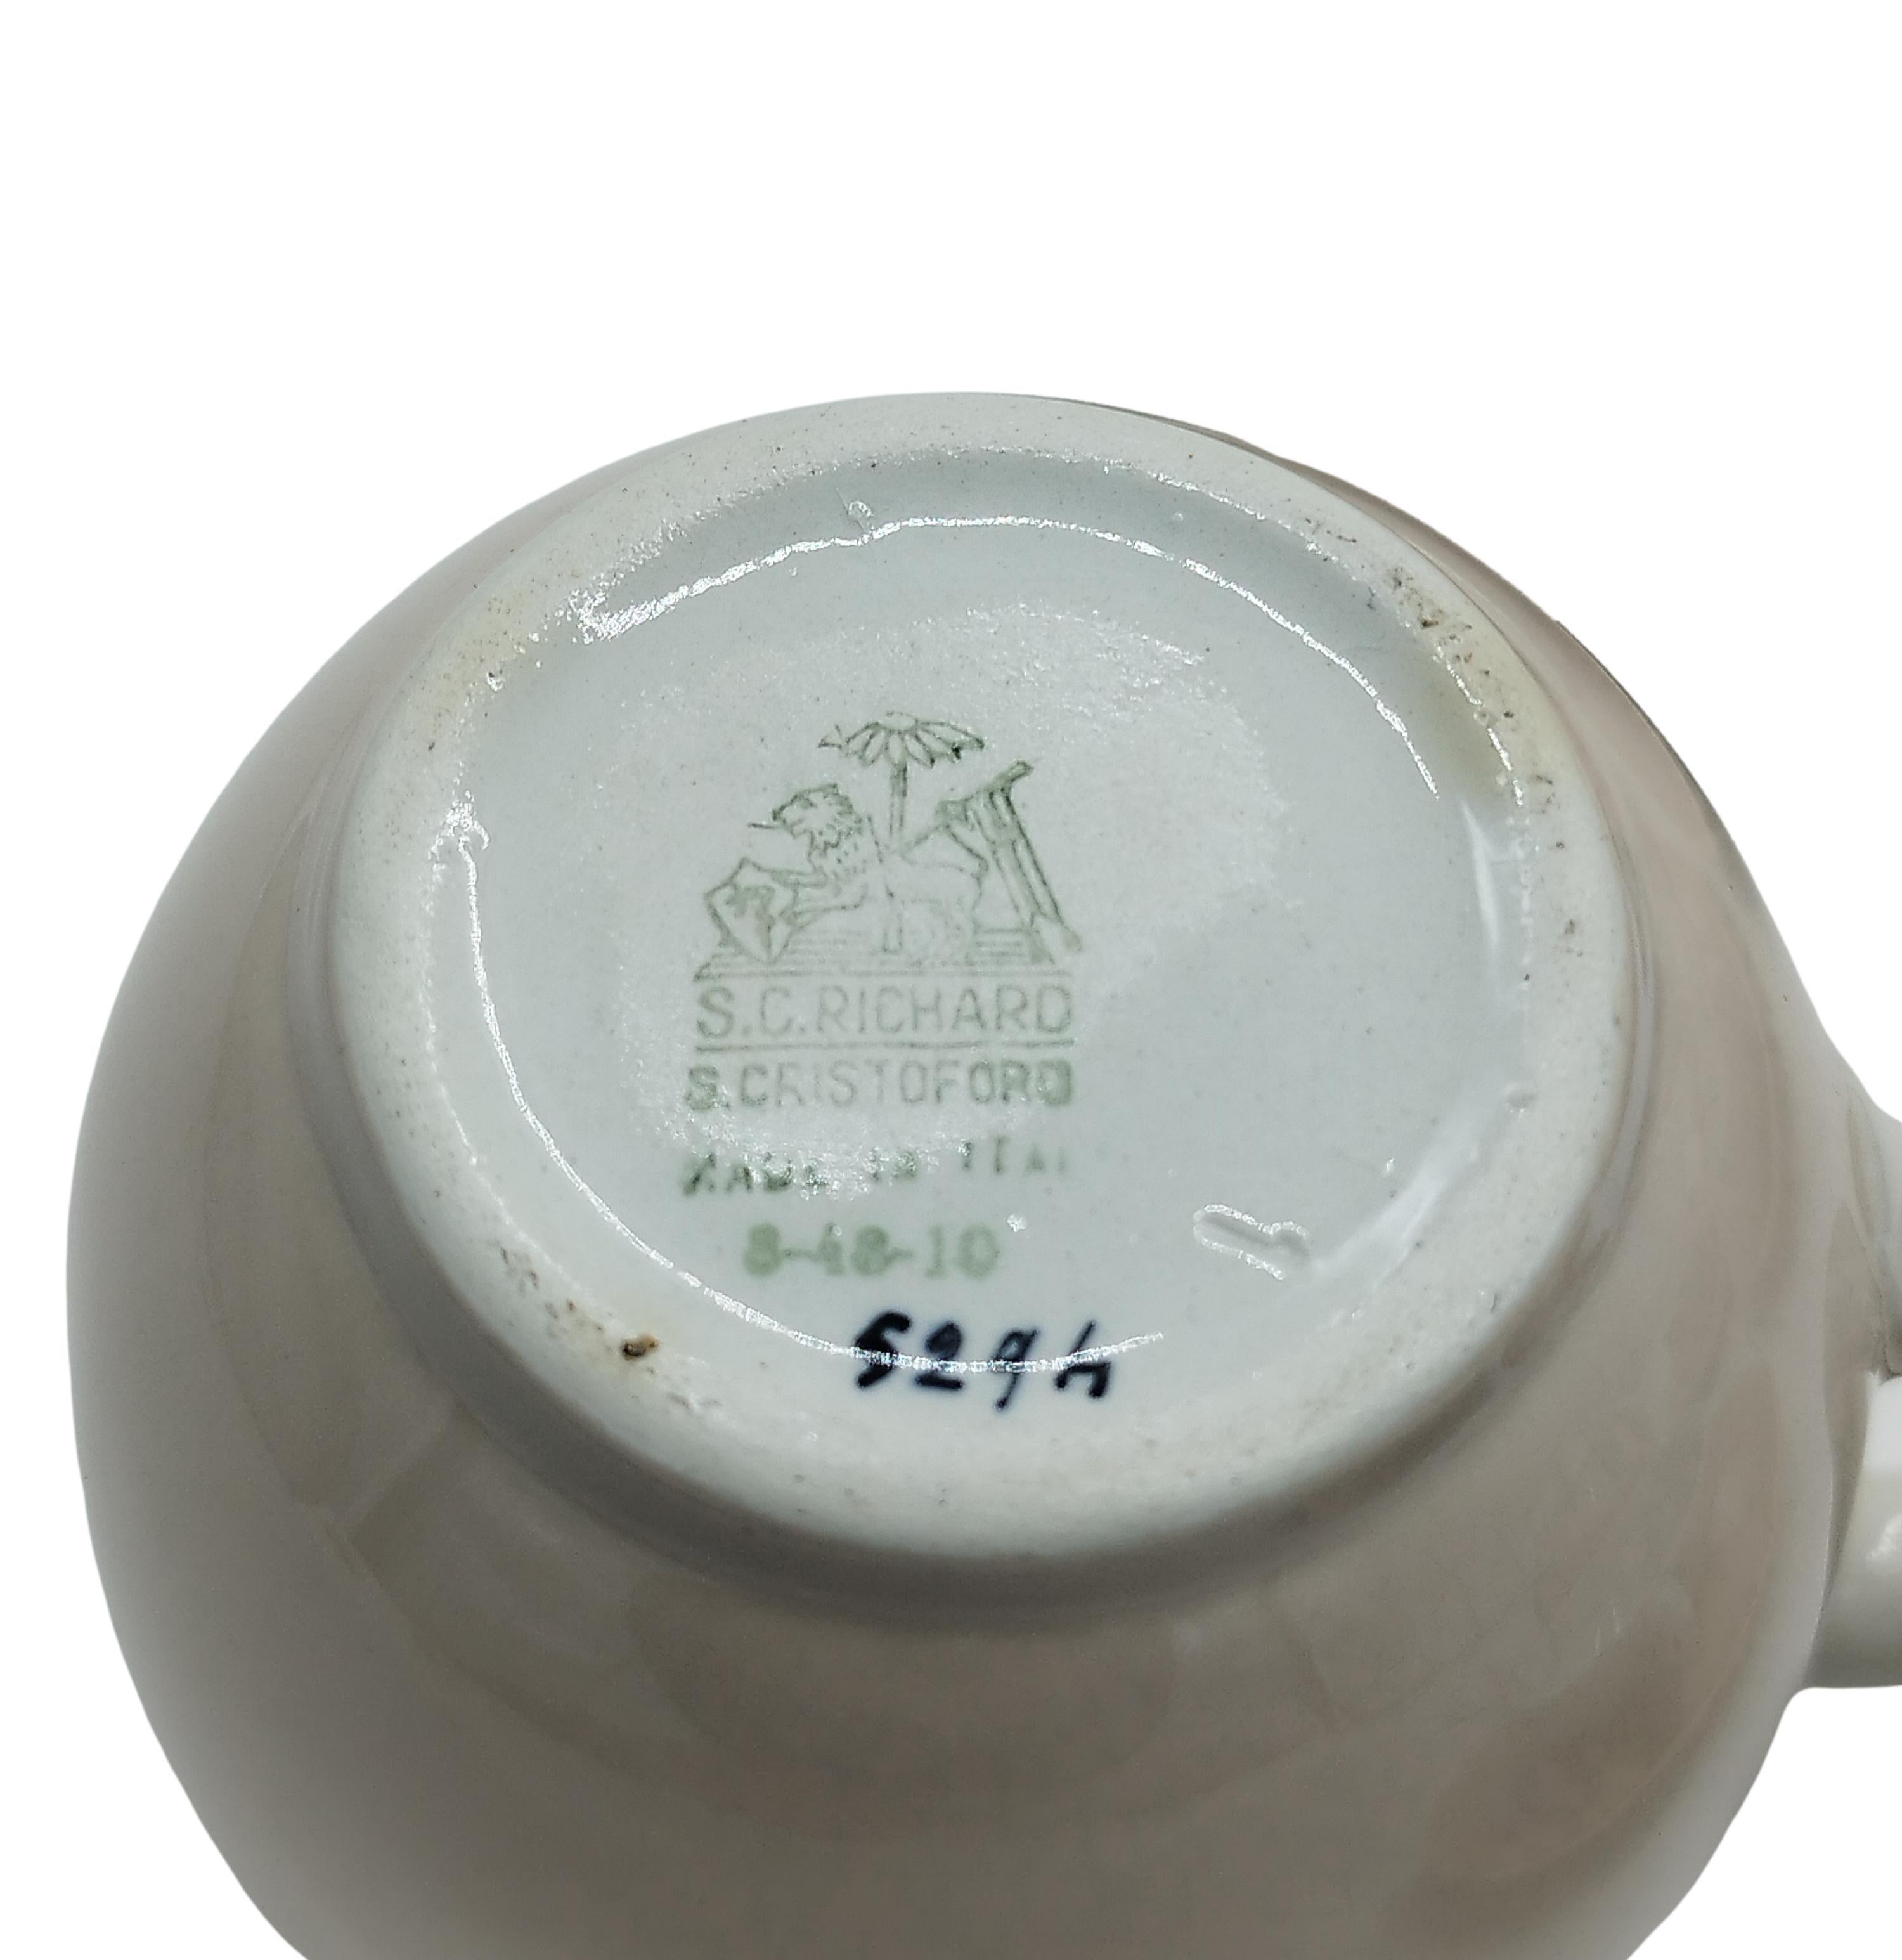 Mid-20th Century S.C. Richard S. Cristoforo Porcelain Tea Service, Italy 1930s For Sale